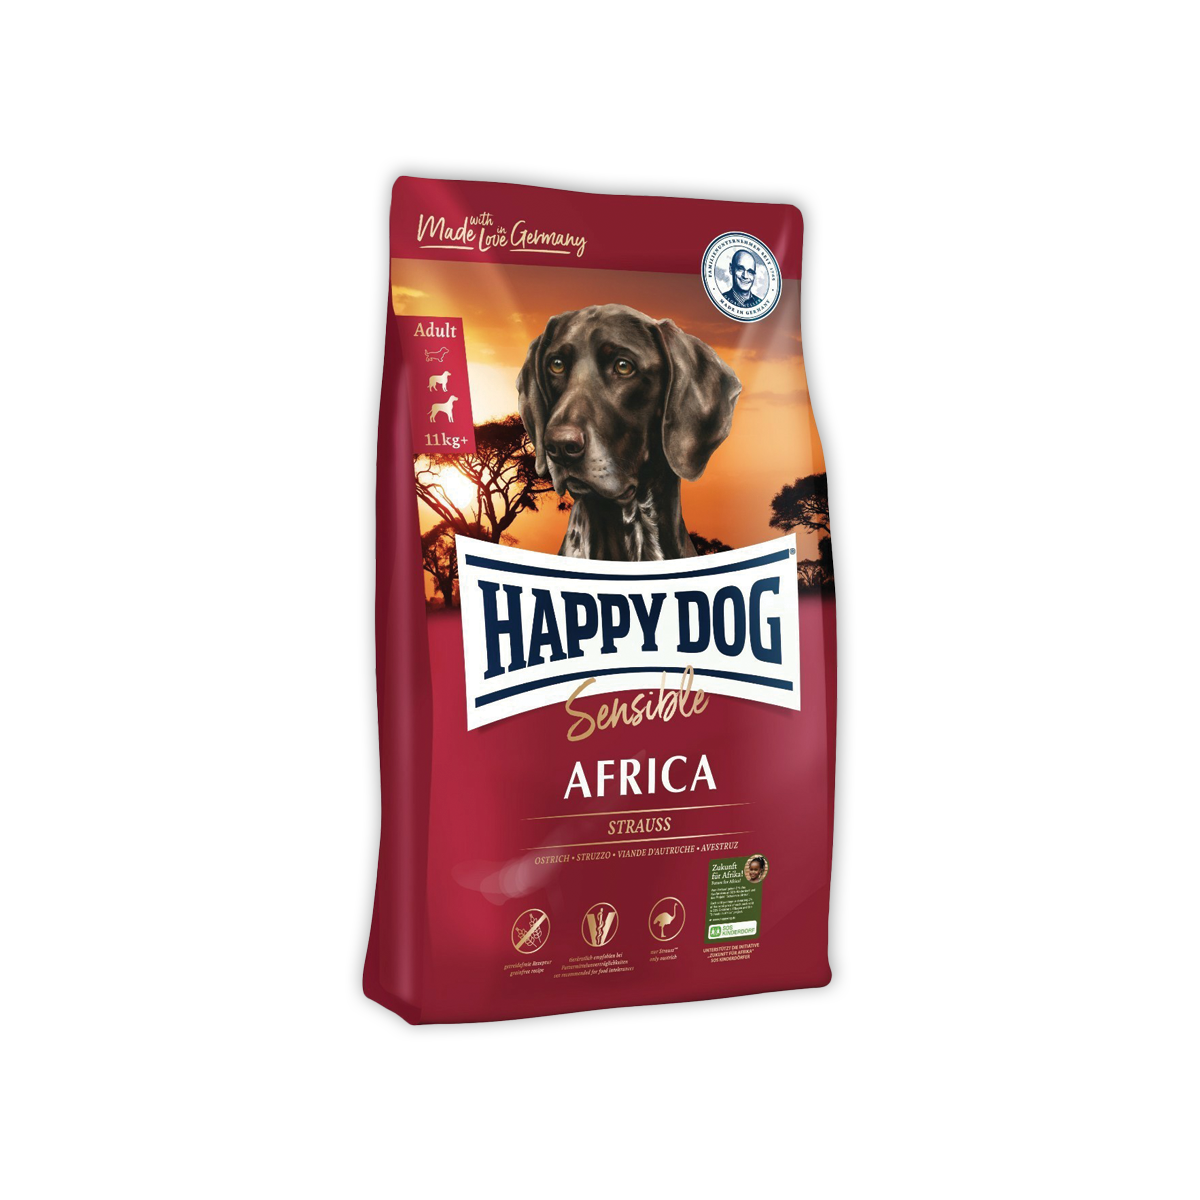 Happy Dog Africa แฮปปี้ ด็อก เซนซิเบิ้ล แอฟริกา อาหารสำหรับสุนัขโต พันธุ์กลาง-ใหญ่